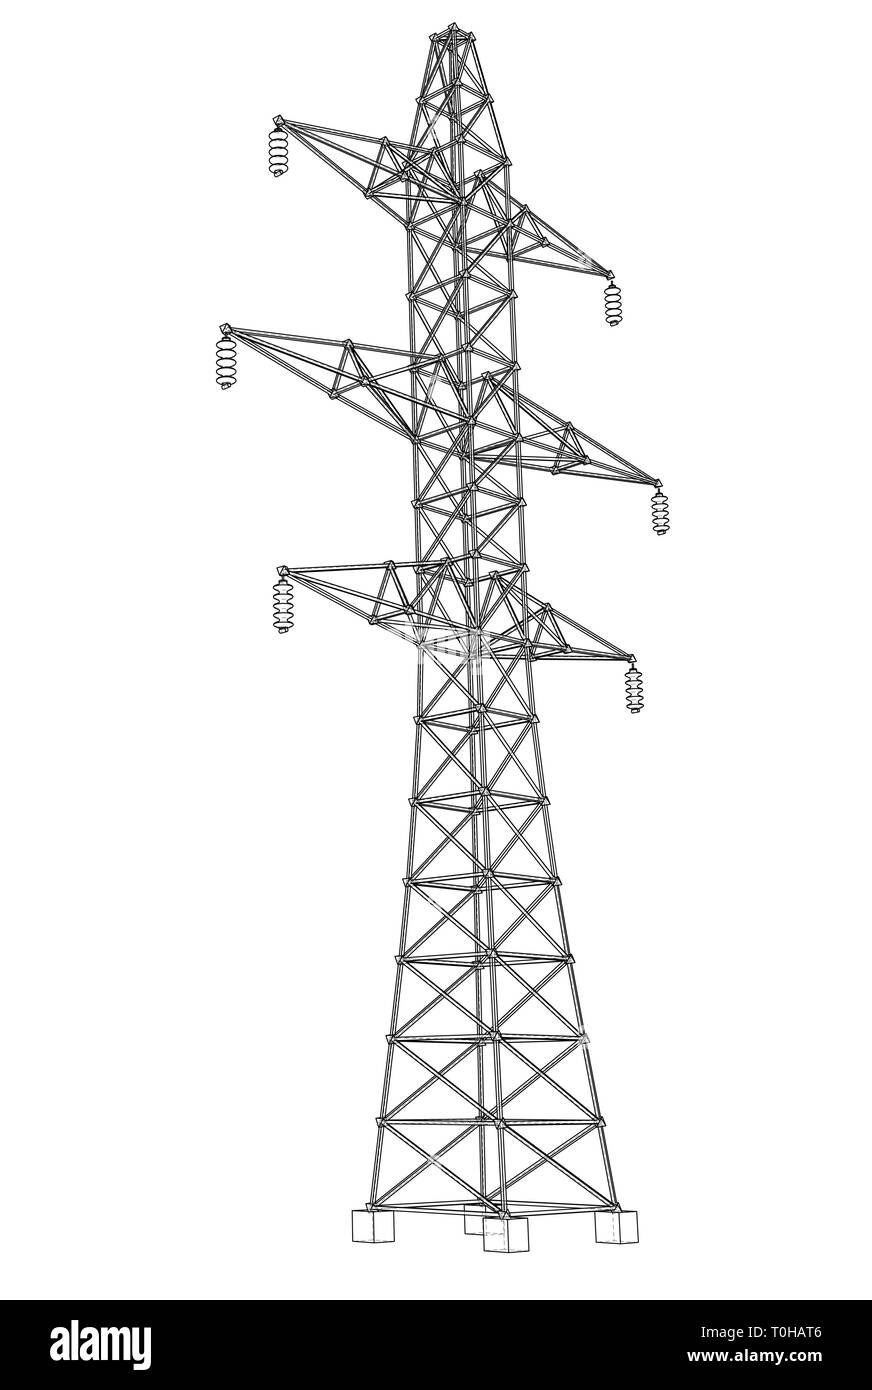 Torre de electrica Imágenes vectoriales de stock - Alamy